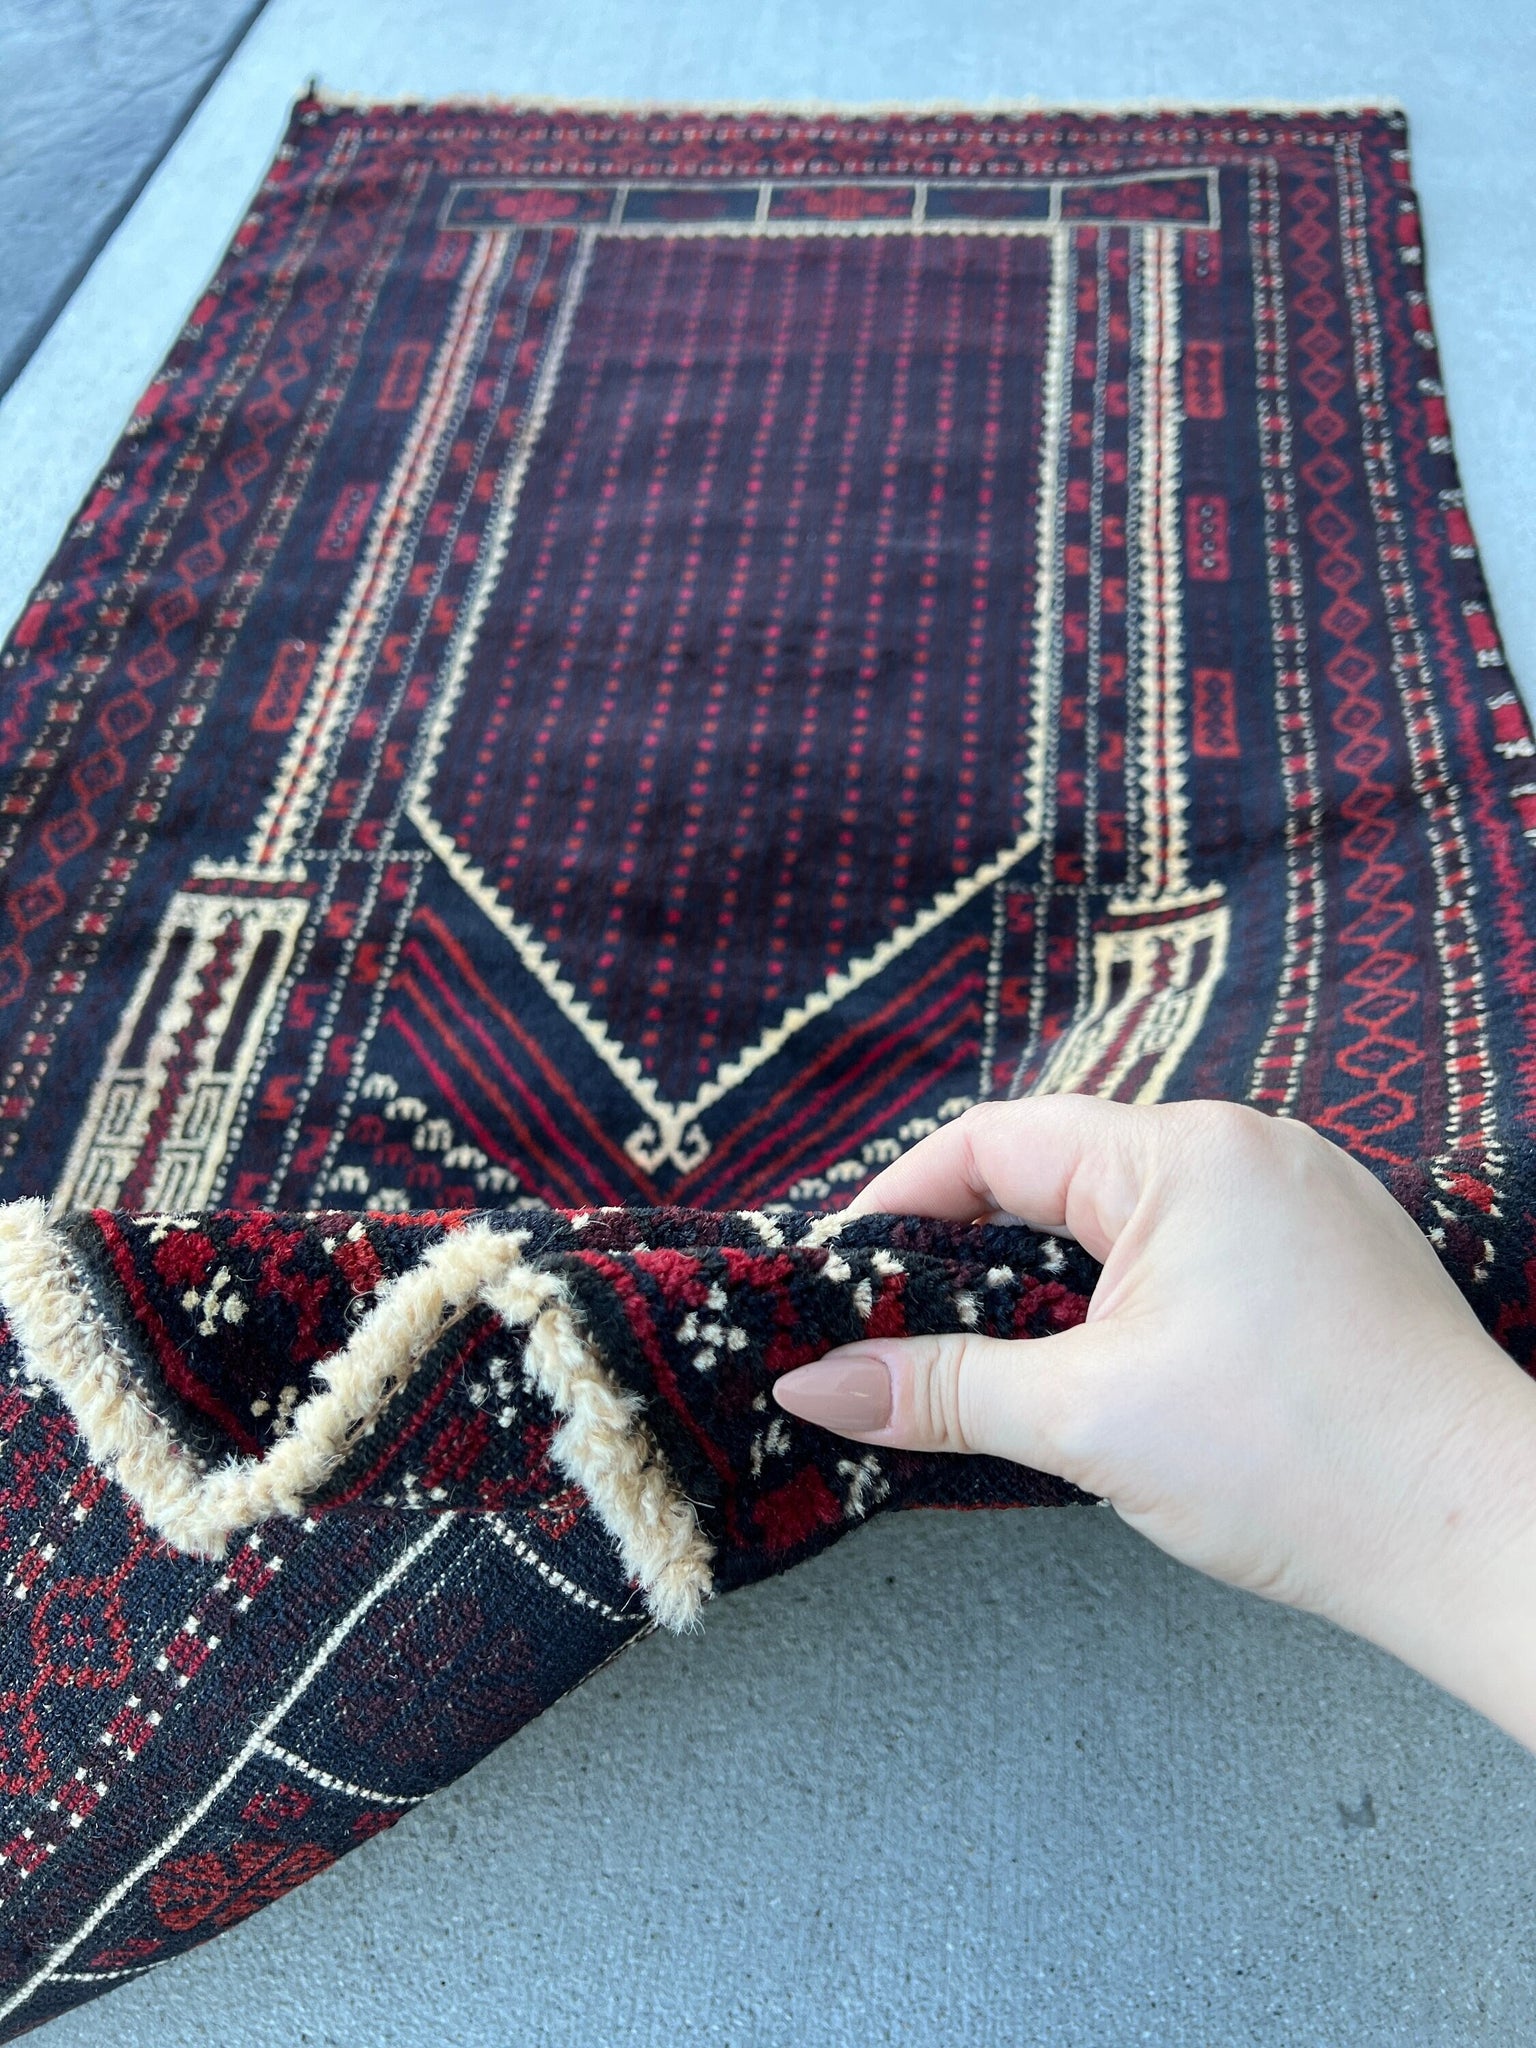 3x5 (100x180) Handmade Vintage Baluch Afghan Rug | Blood Red Cream Beige Crimson Red | Hand Knotted Prayer Rug Persian Turkish Bohemian Wool